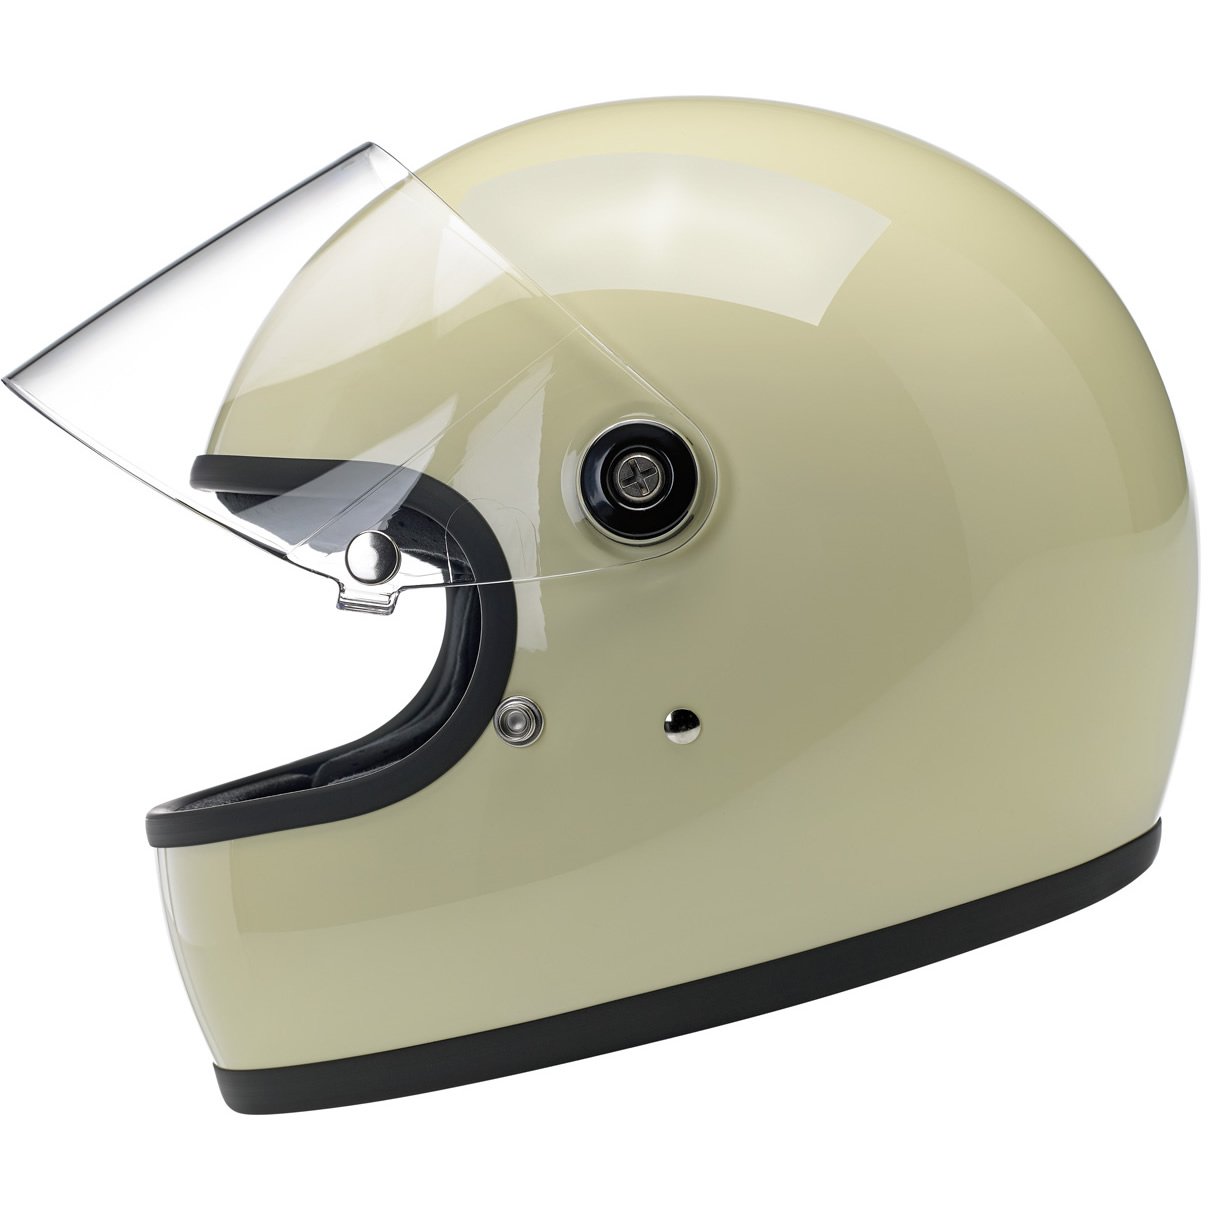 Biltwell Gringo S Helmet - Vintage White